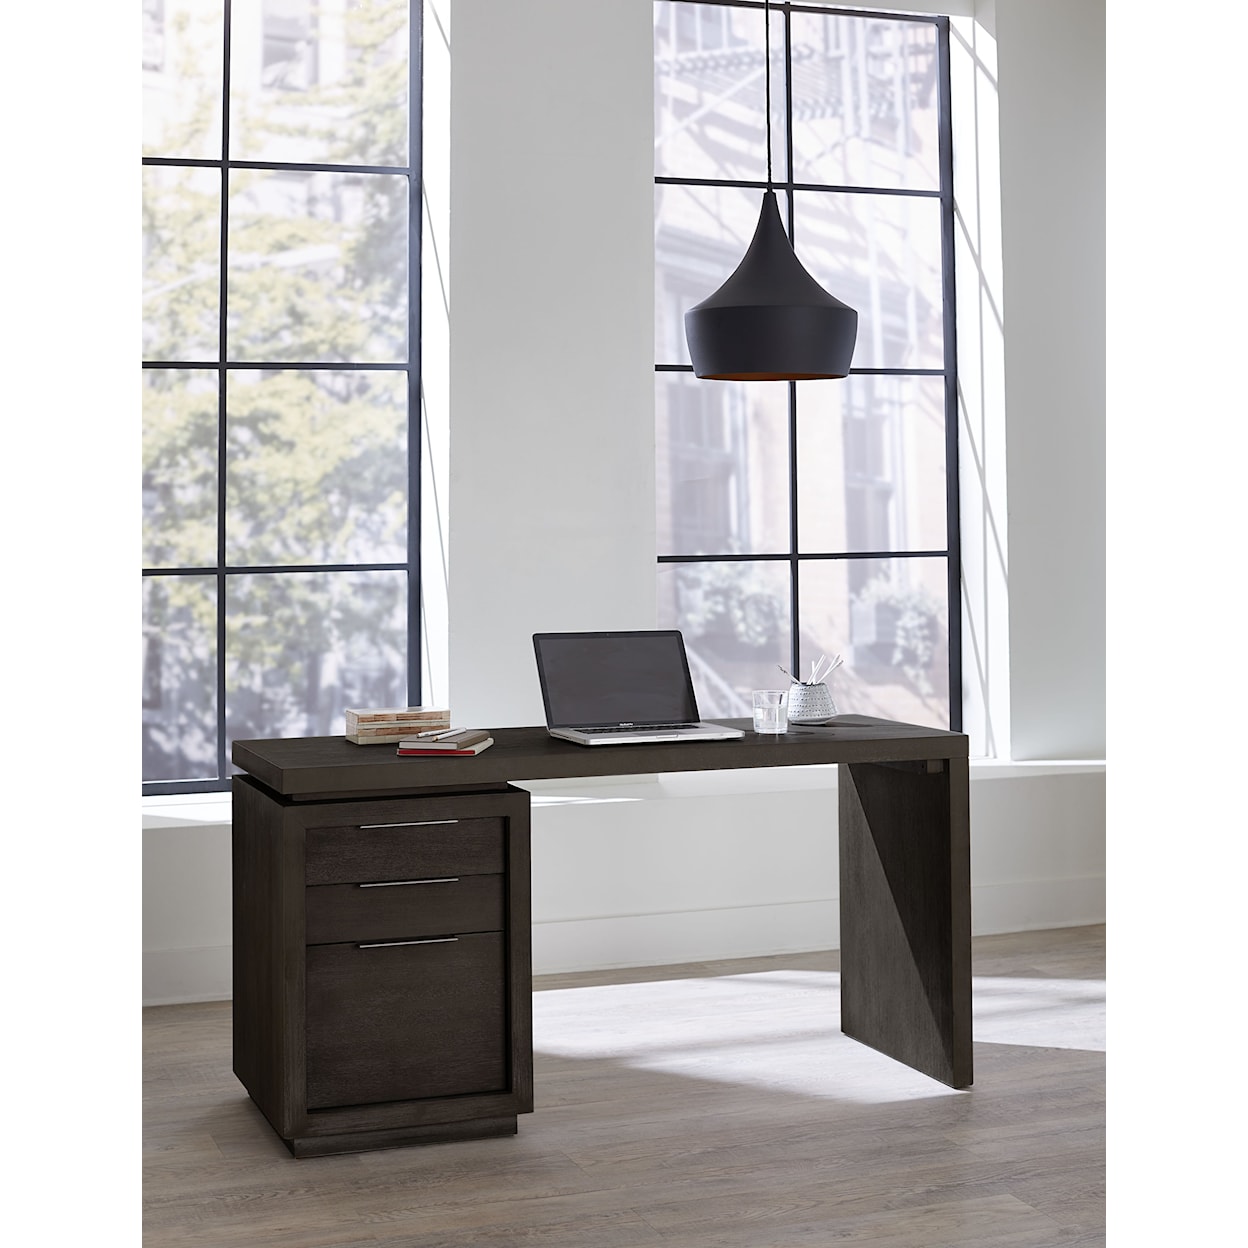 Modus International Oxford Single Pedestal Desk in Basalt grey